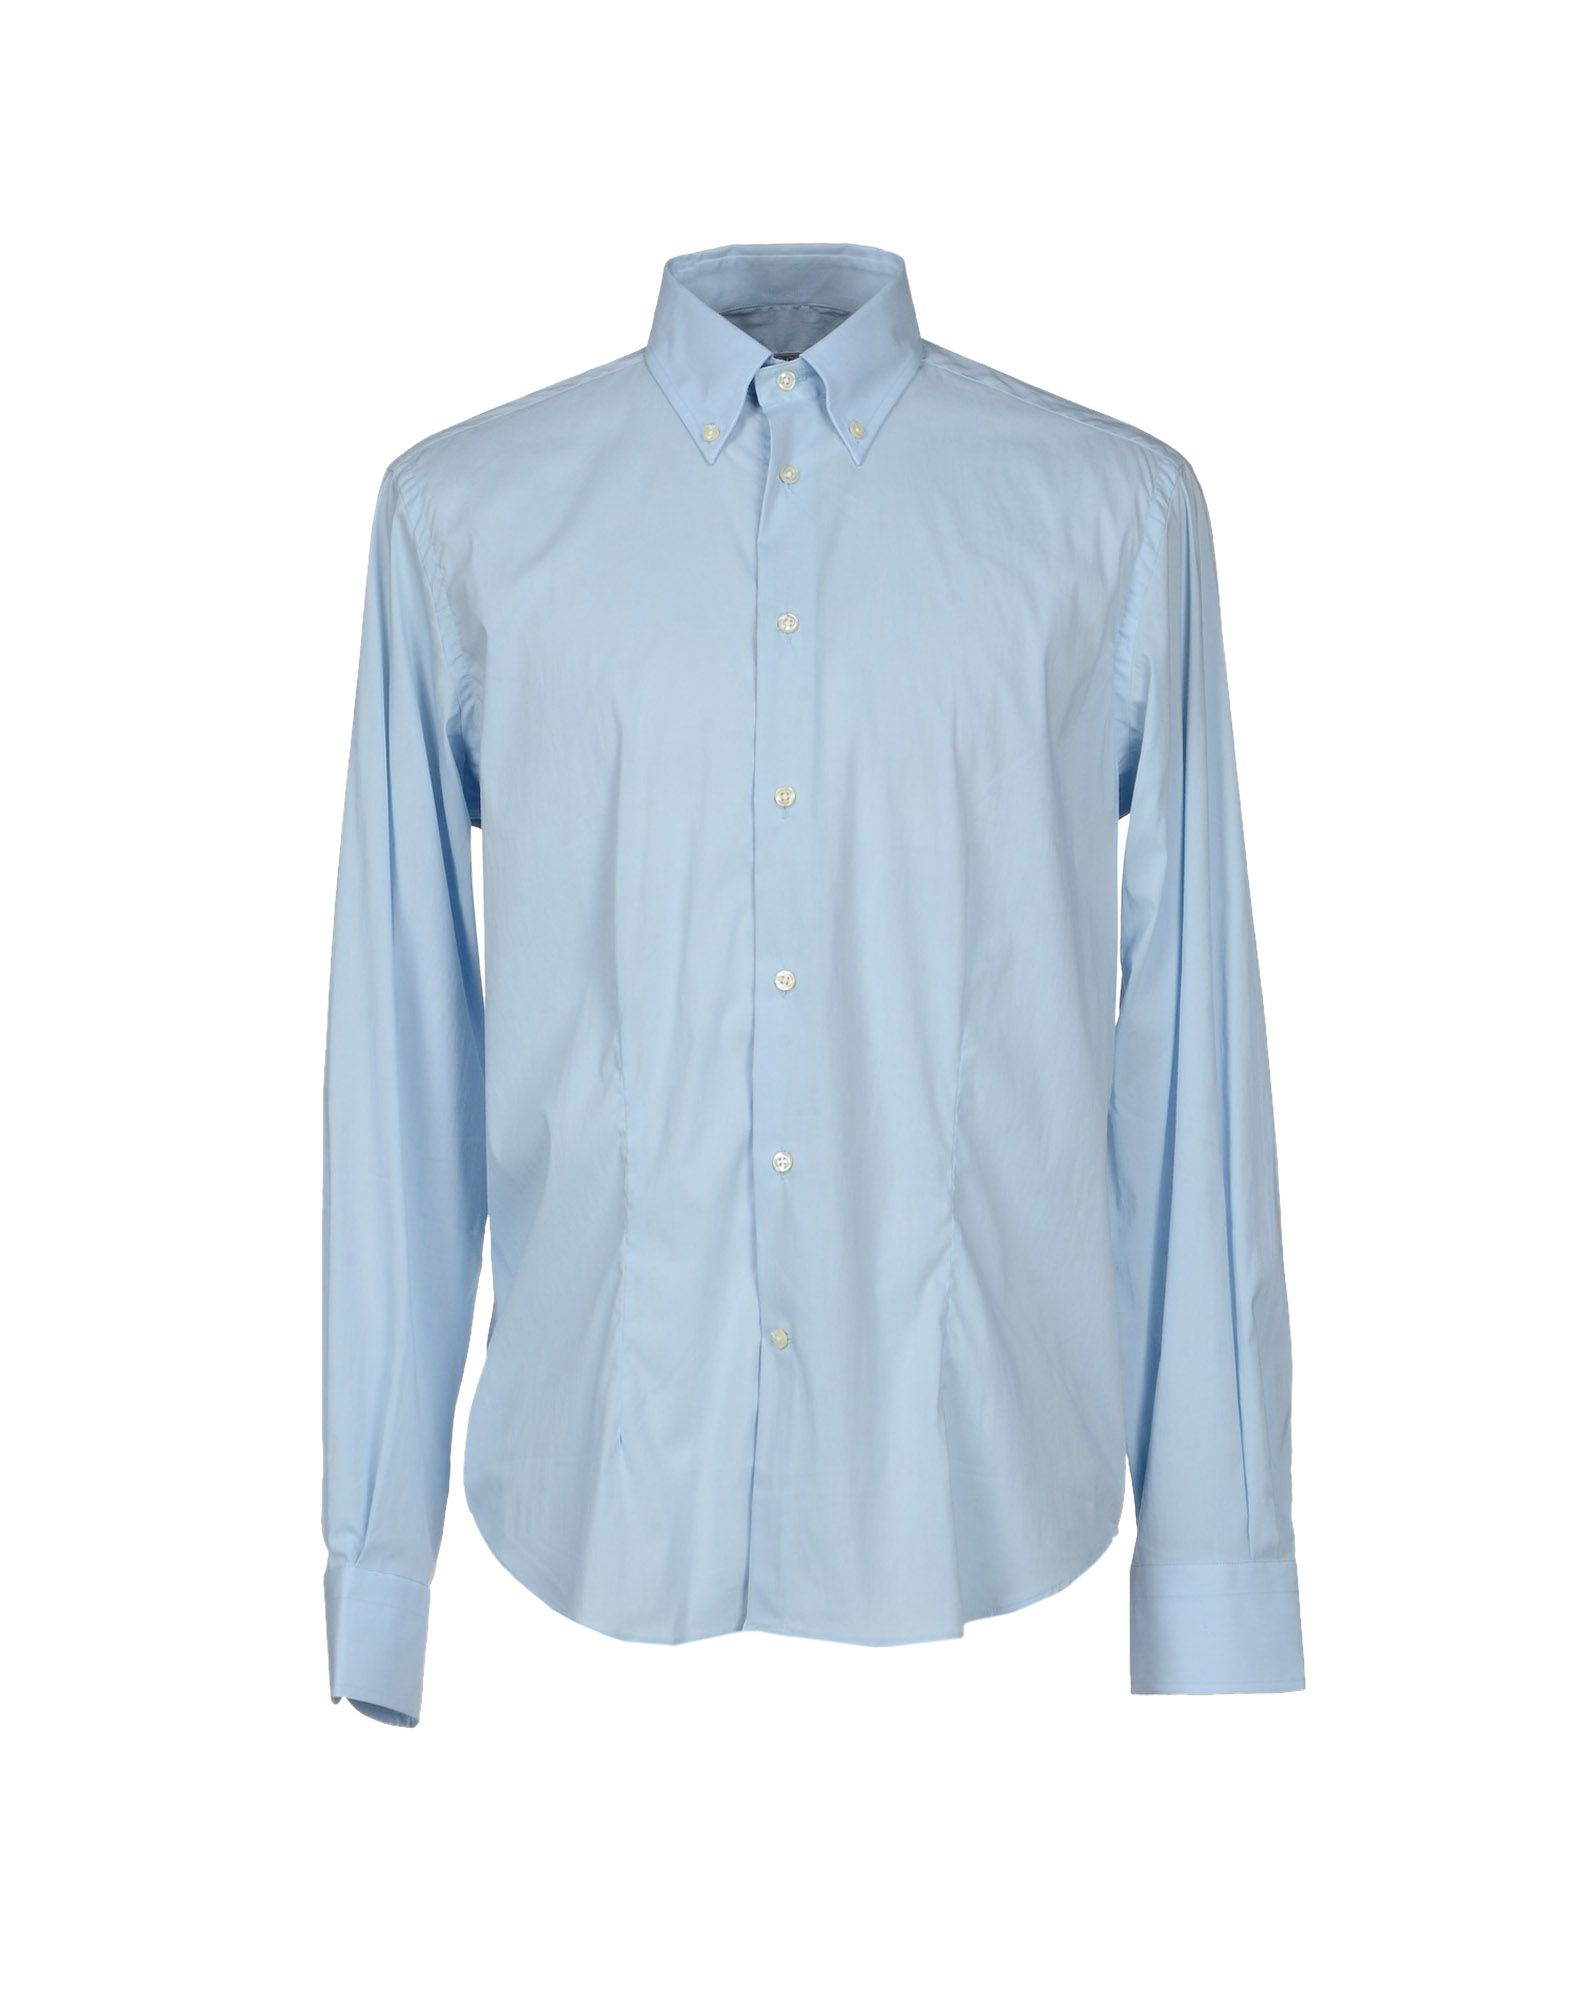 Enrico coveri Shirt in Blue for Men (Sky blue) | Lyst